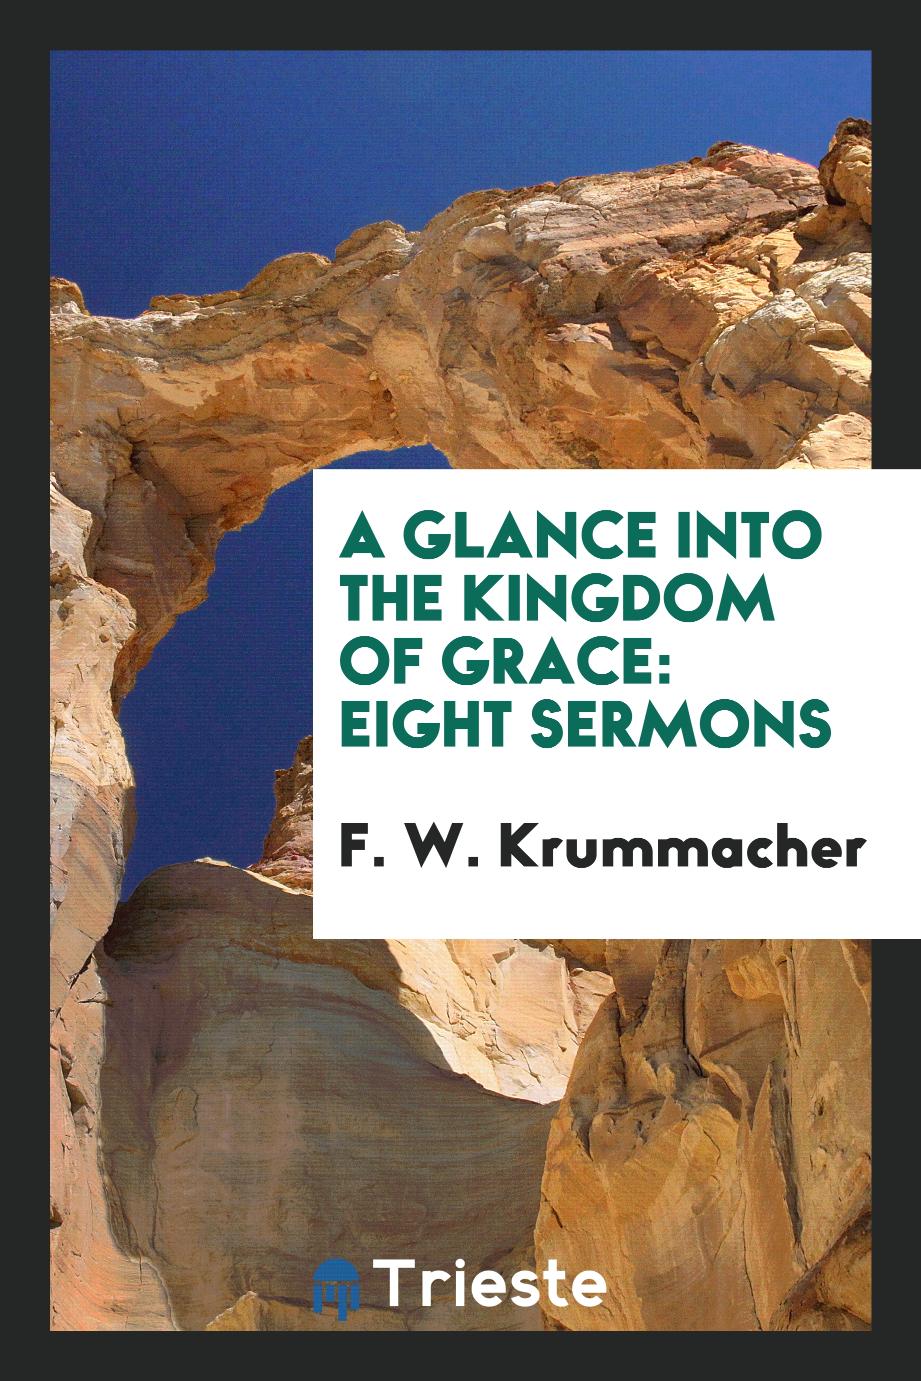 A glance into the kingdom of grace: eight sermons